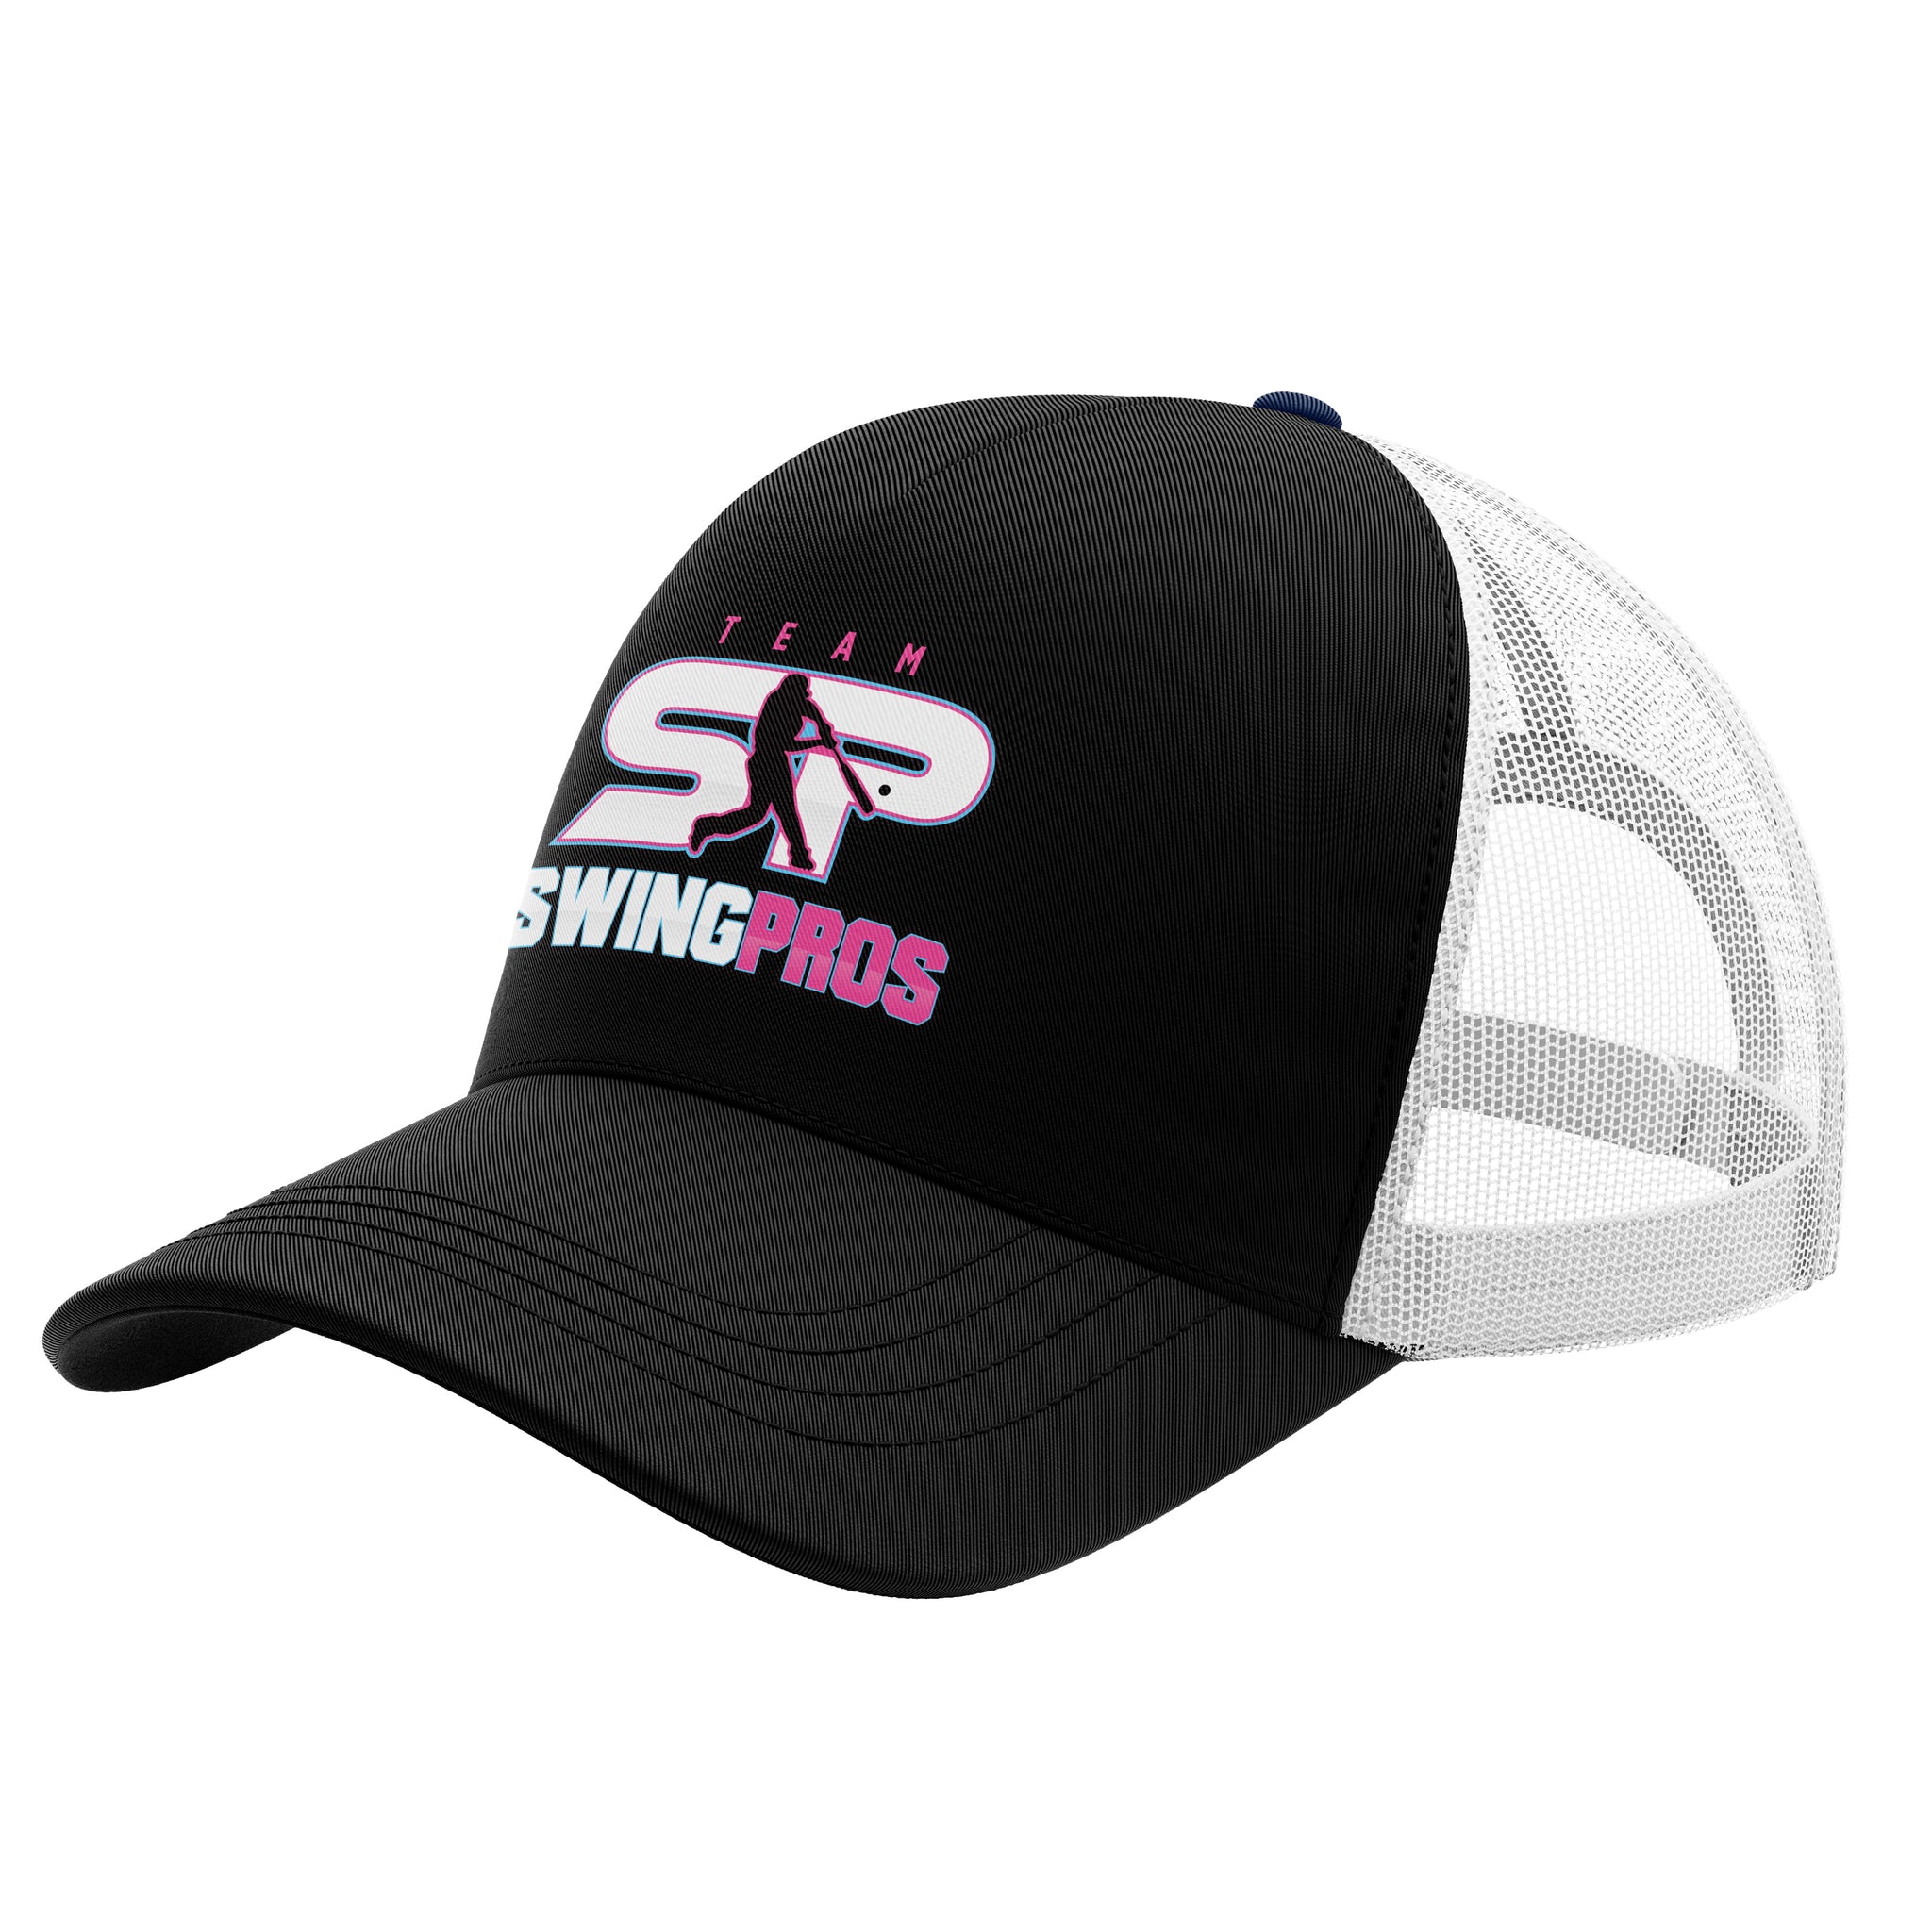 TEAM SWING PROS 1.0 112 SNAPBACK HAT